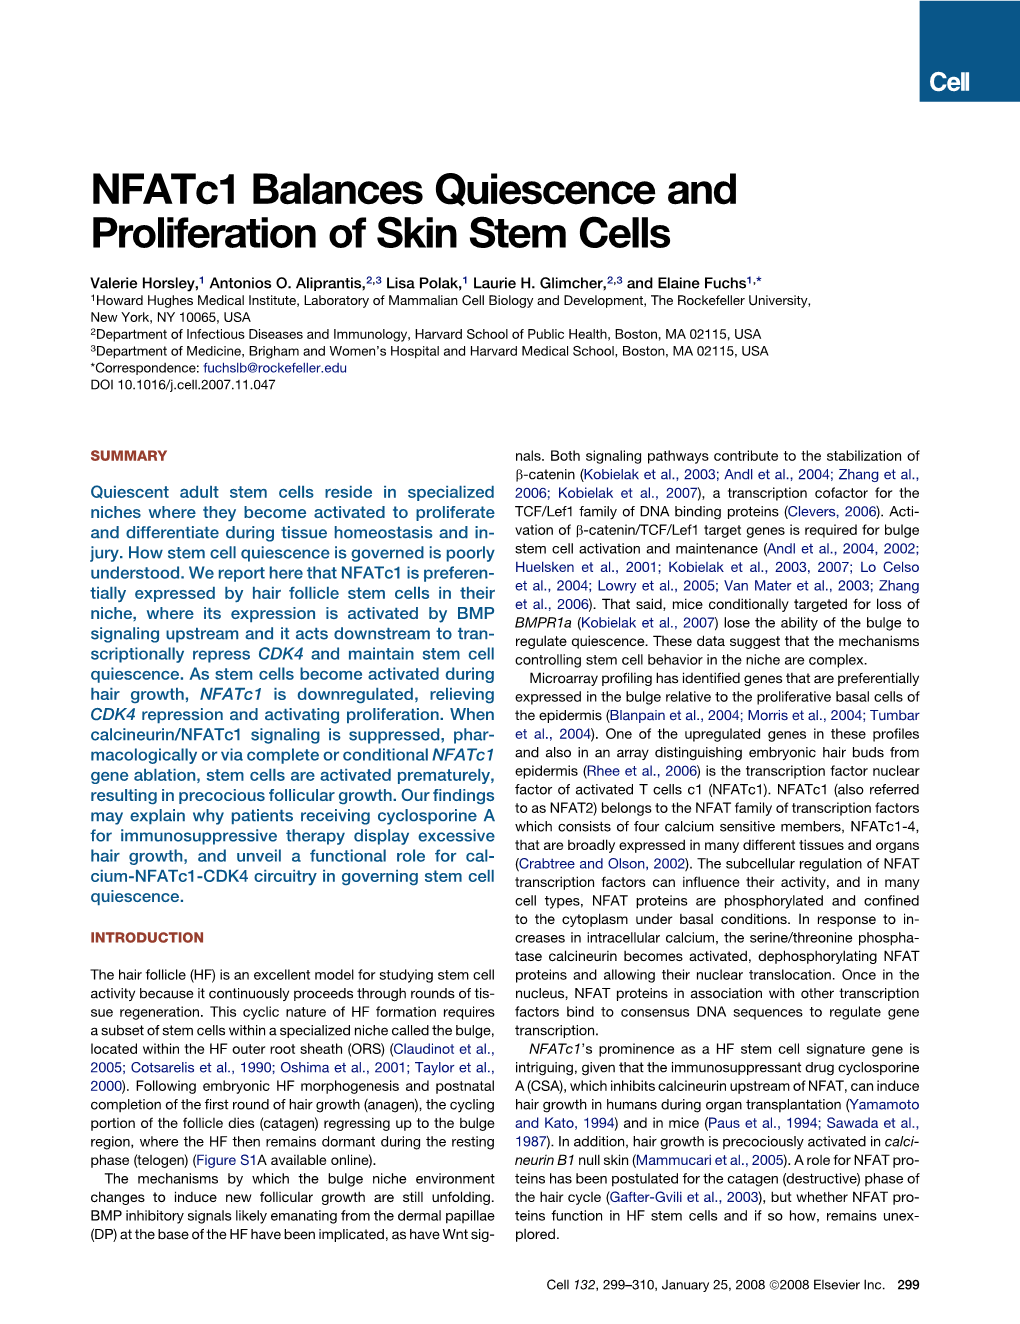 Nfatc1 Balances Quiescence and Proliferation of Skin Stem Cells